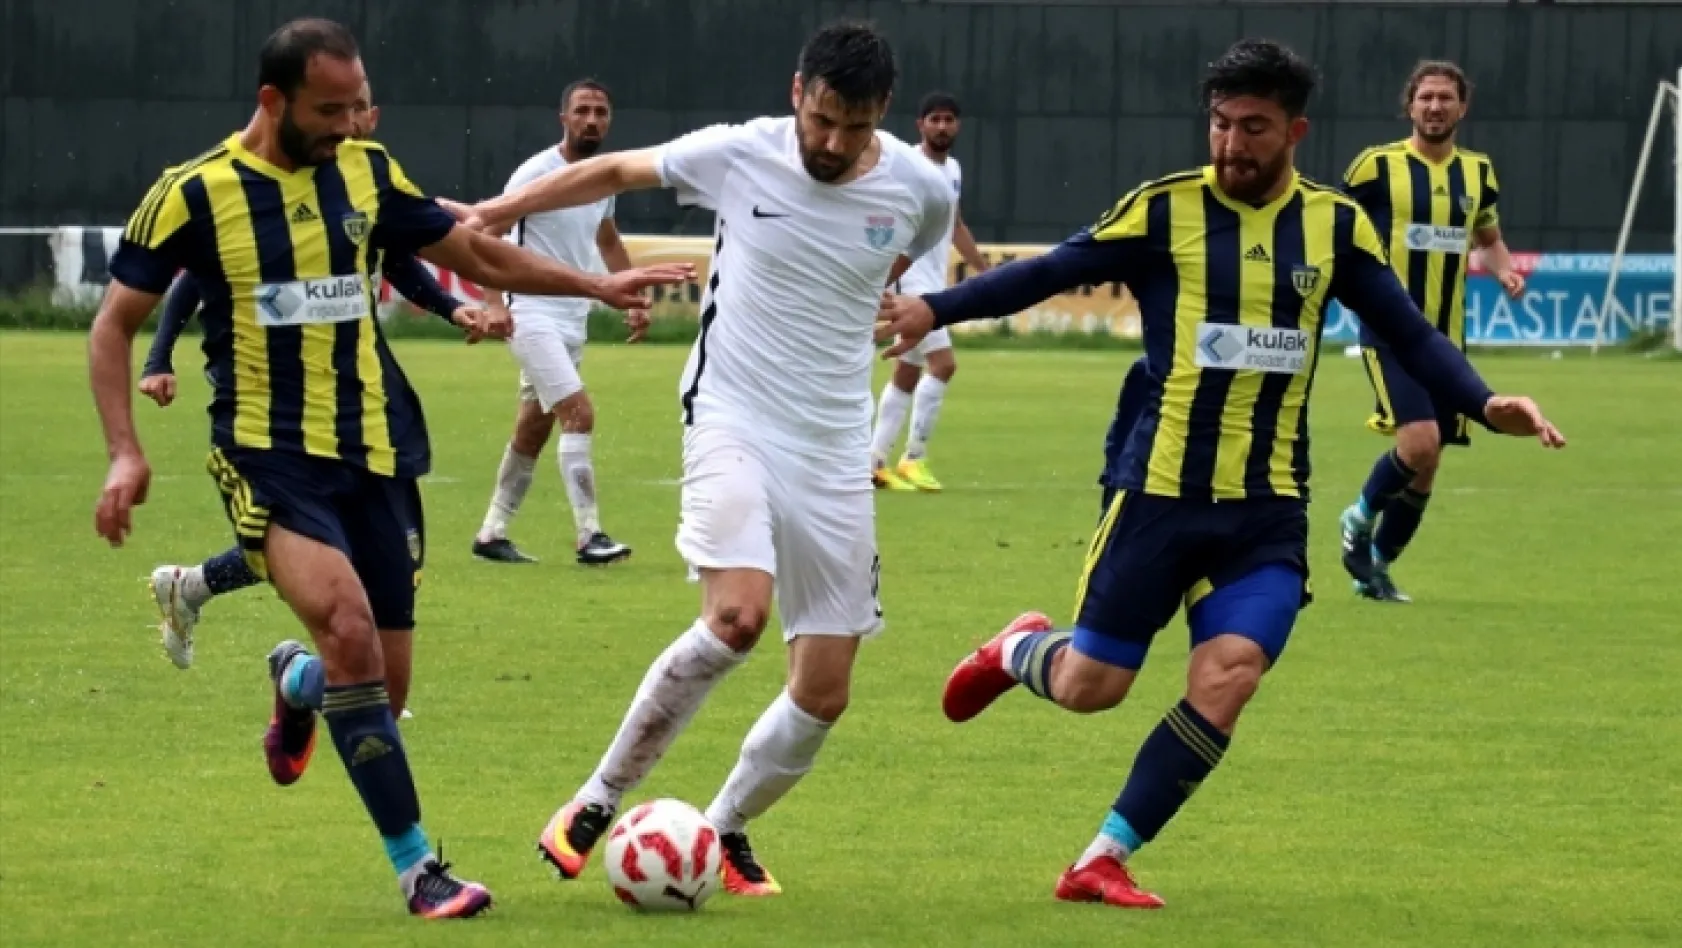 Elaziz Belediyespor 2 - 5 Tarsus İdman Yurdu